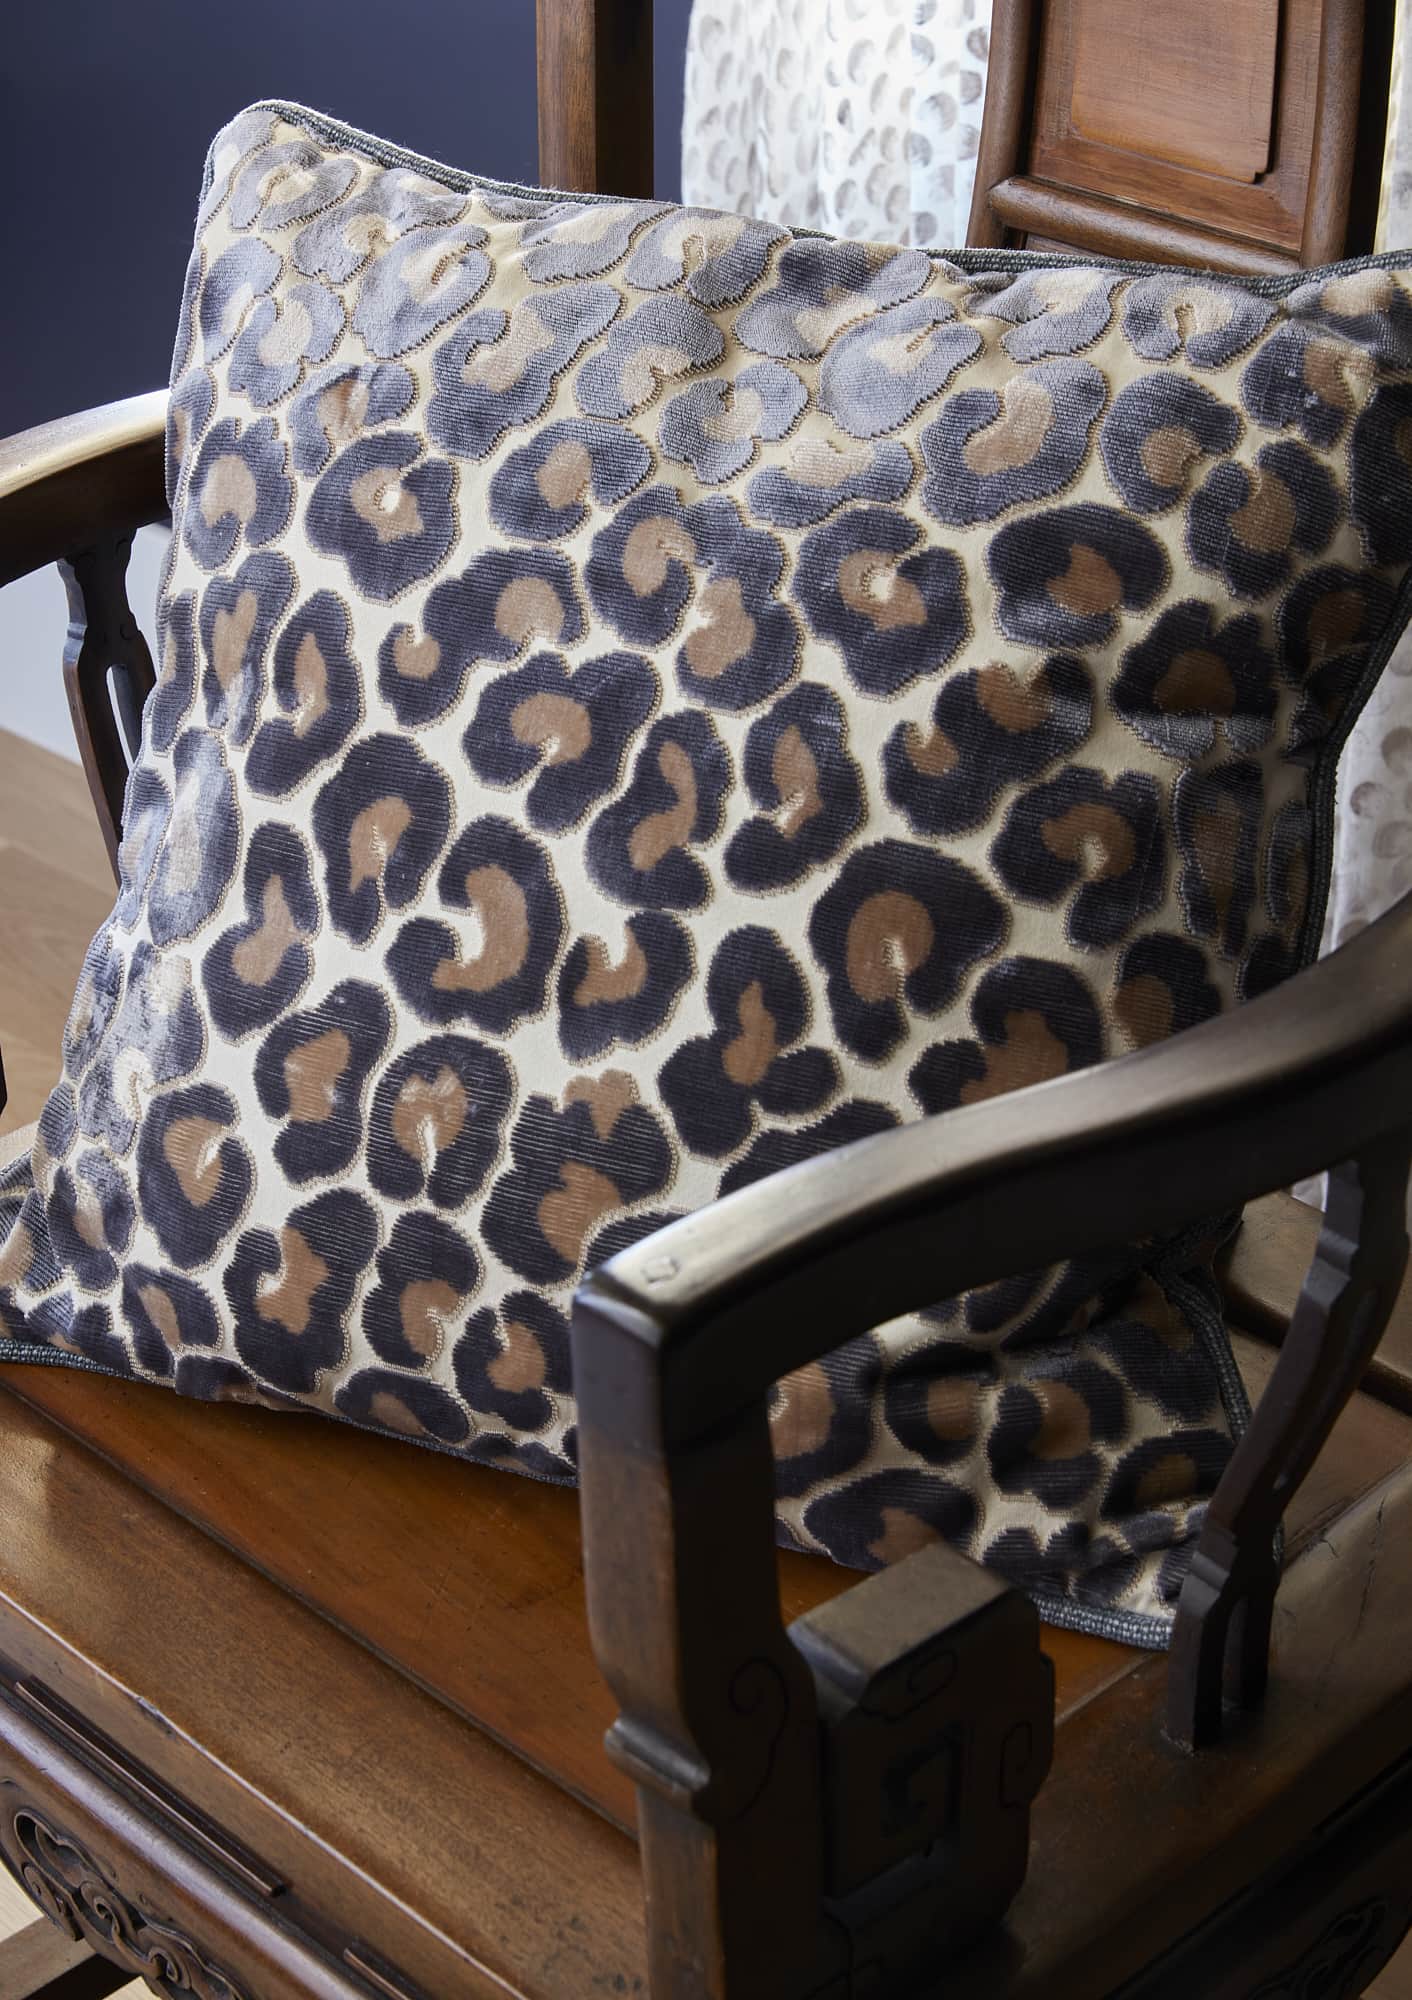 velvet animal print throw pillow on antique wooden chair